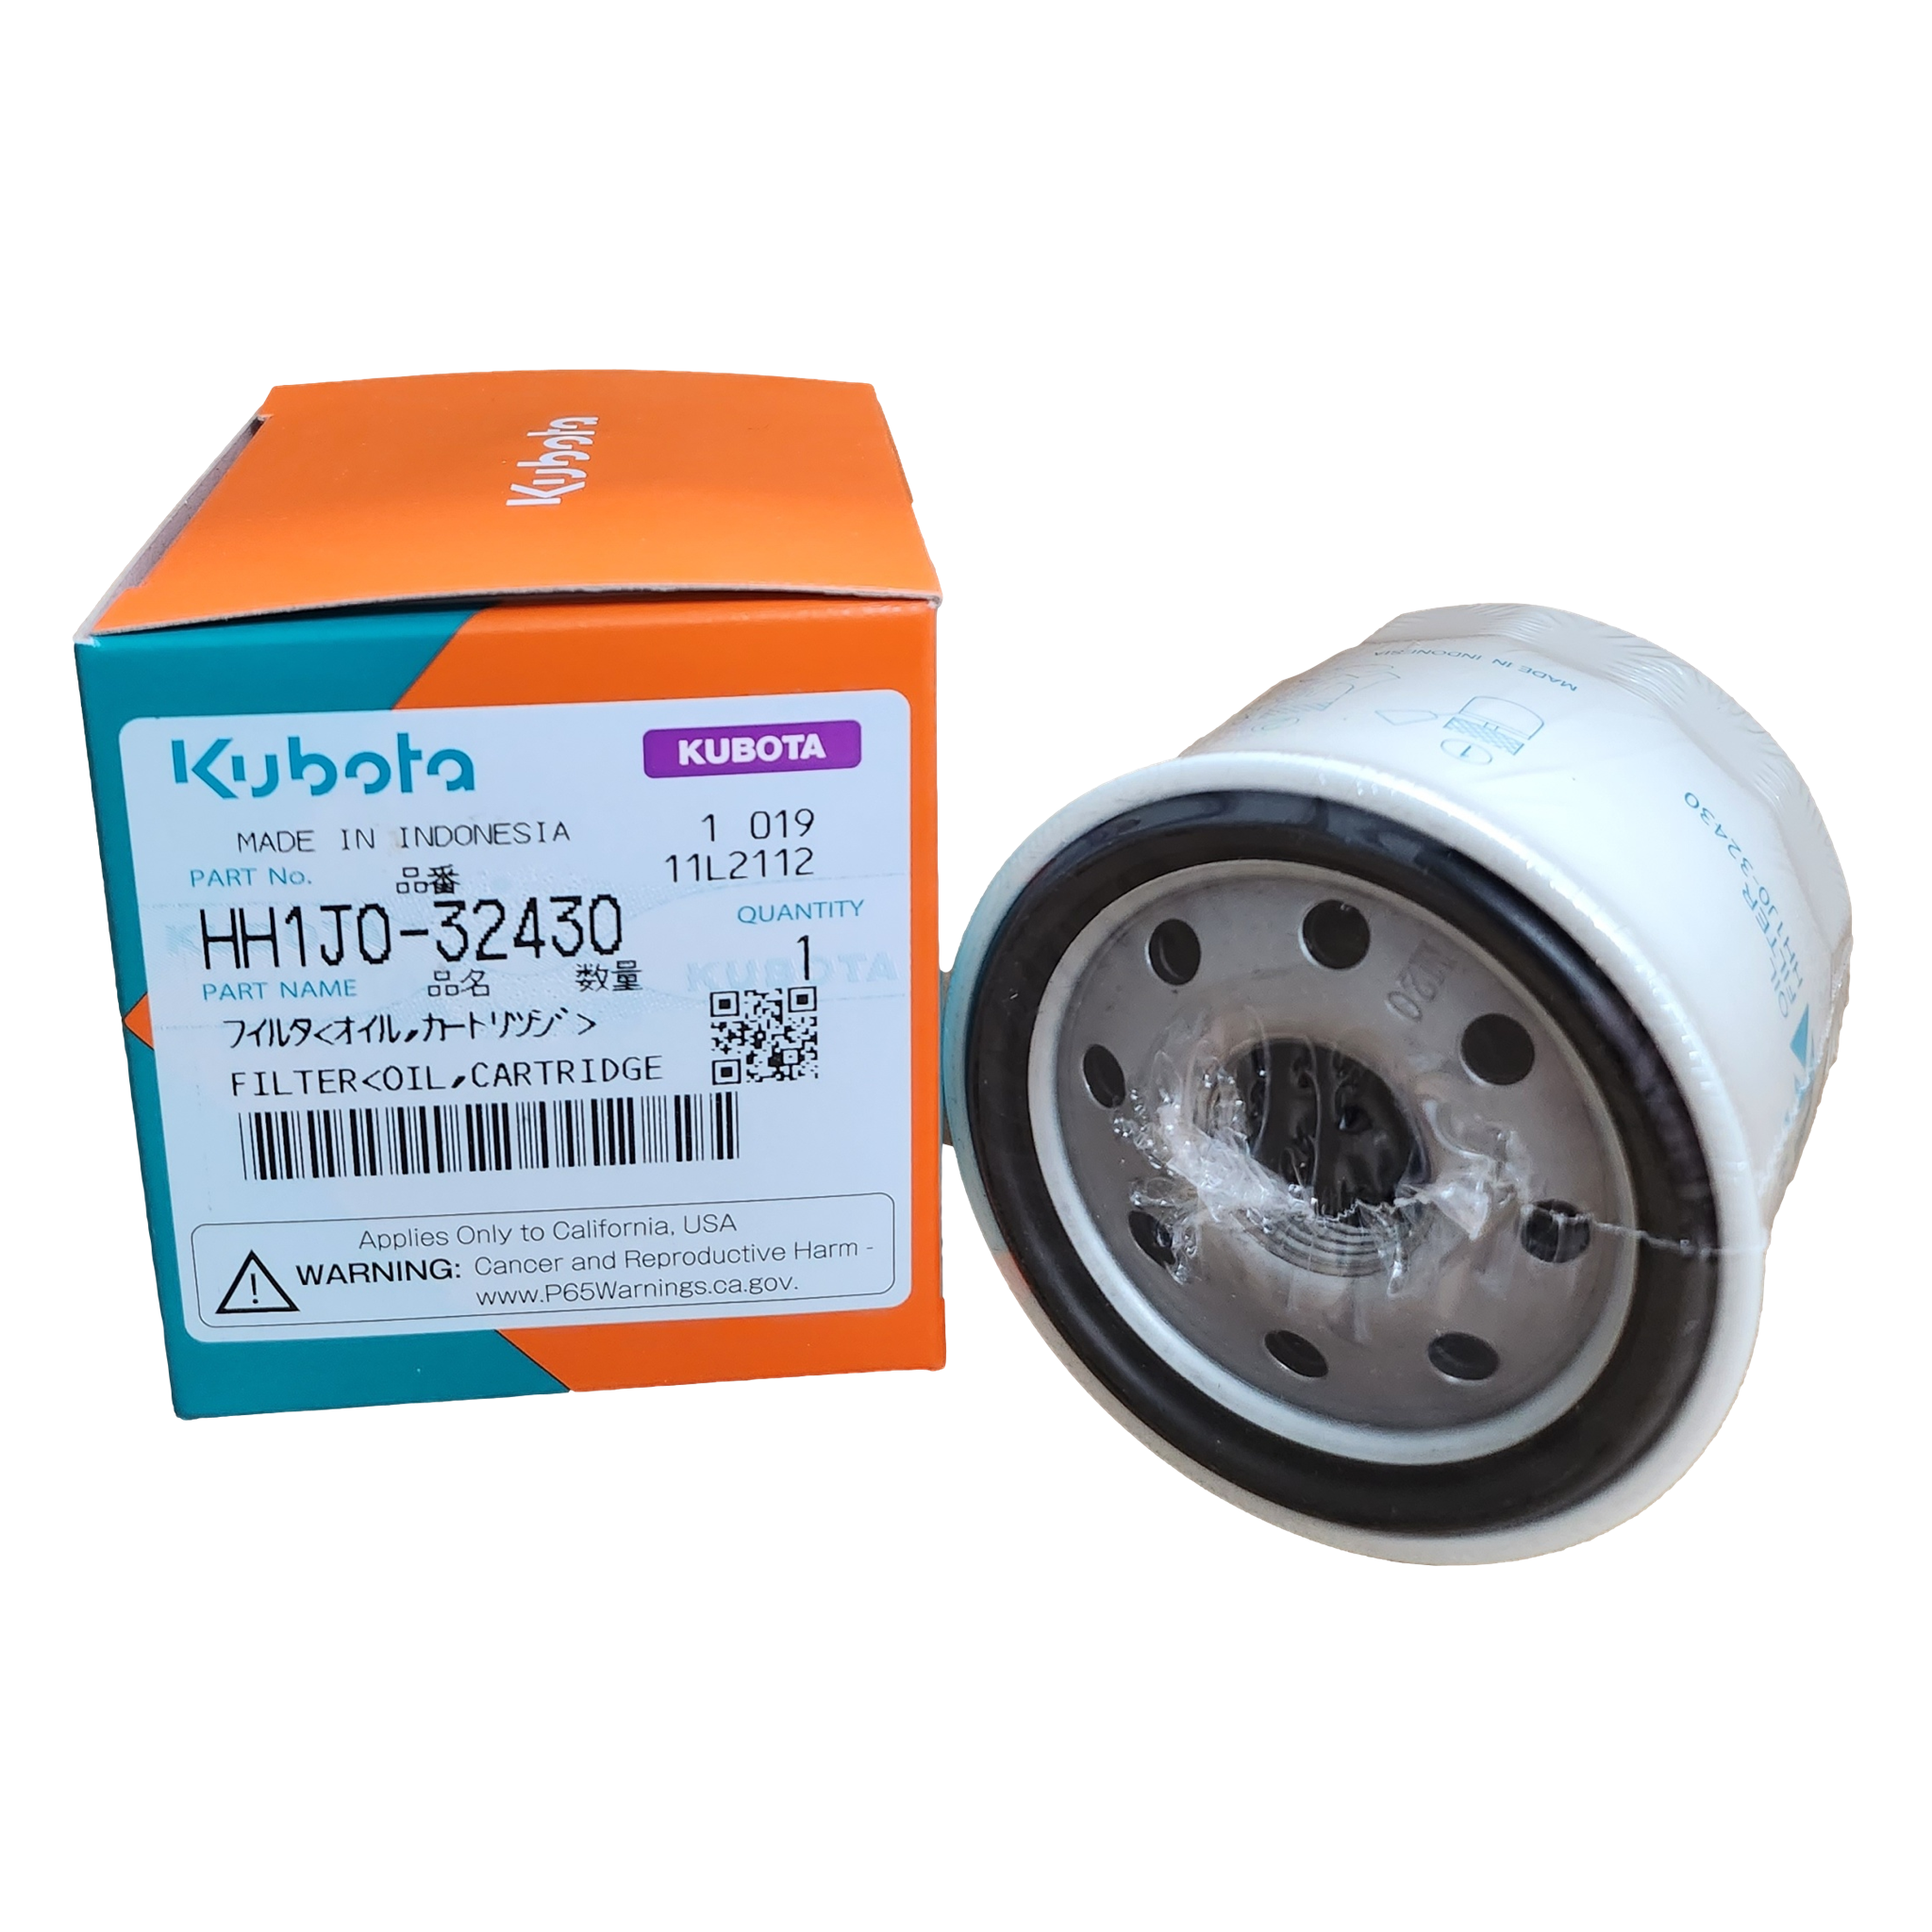 Kubota HH150-32430 Fuel Filter